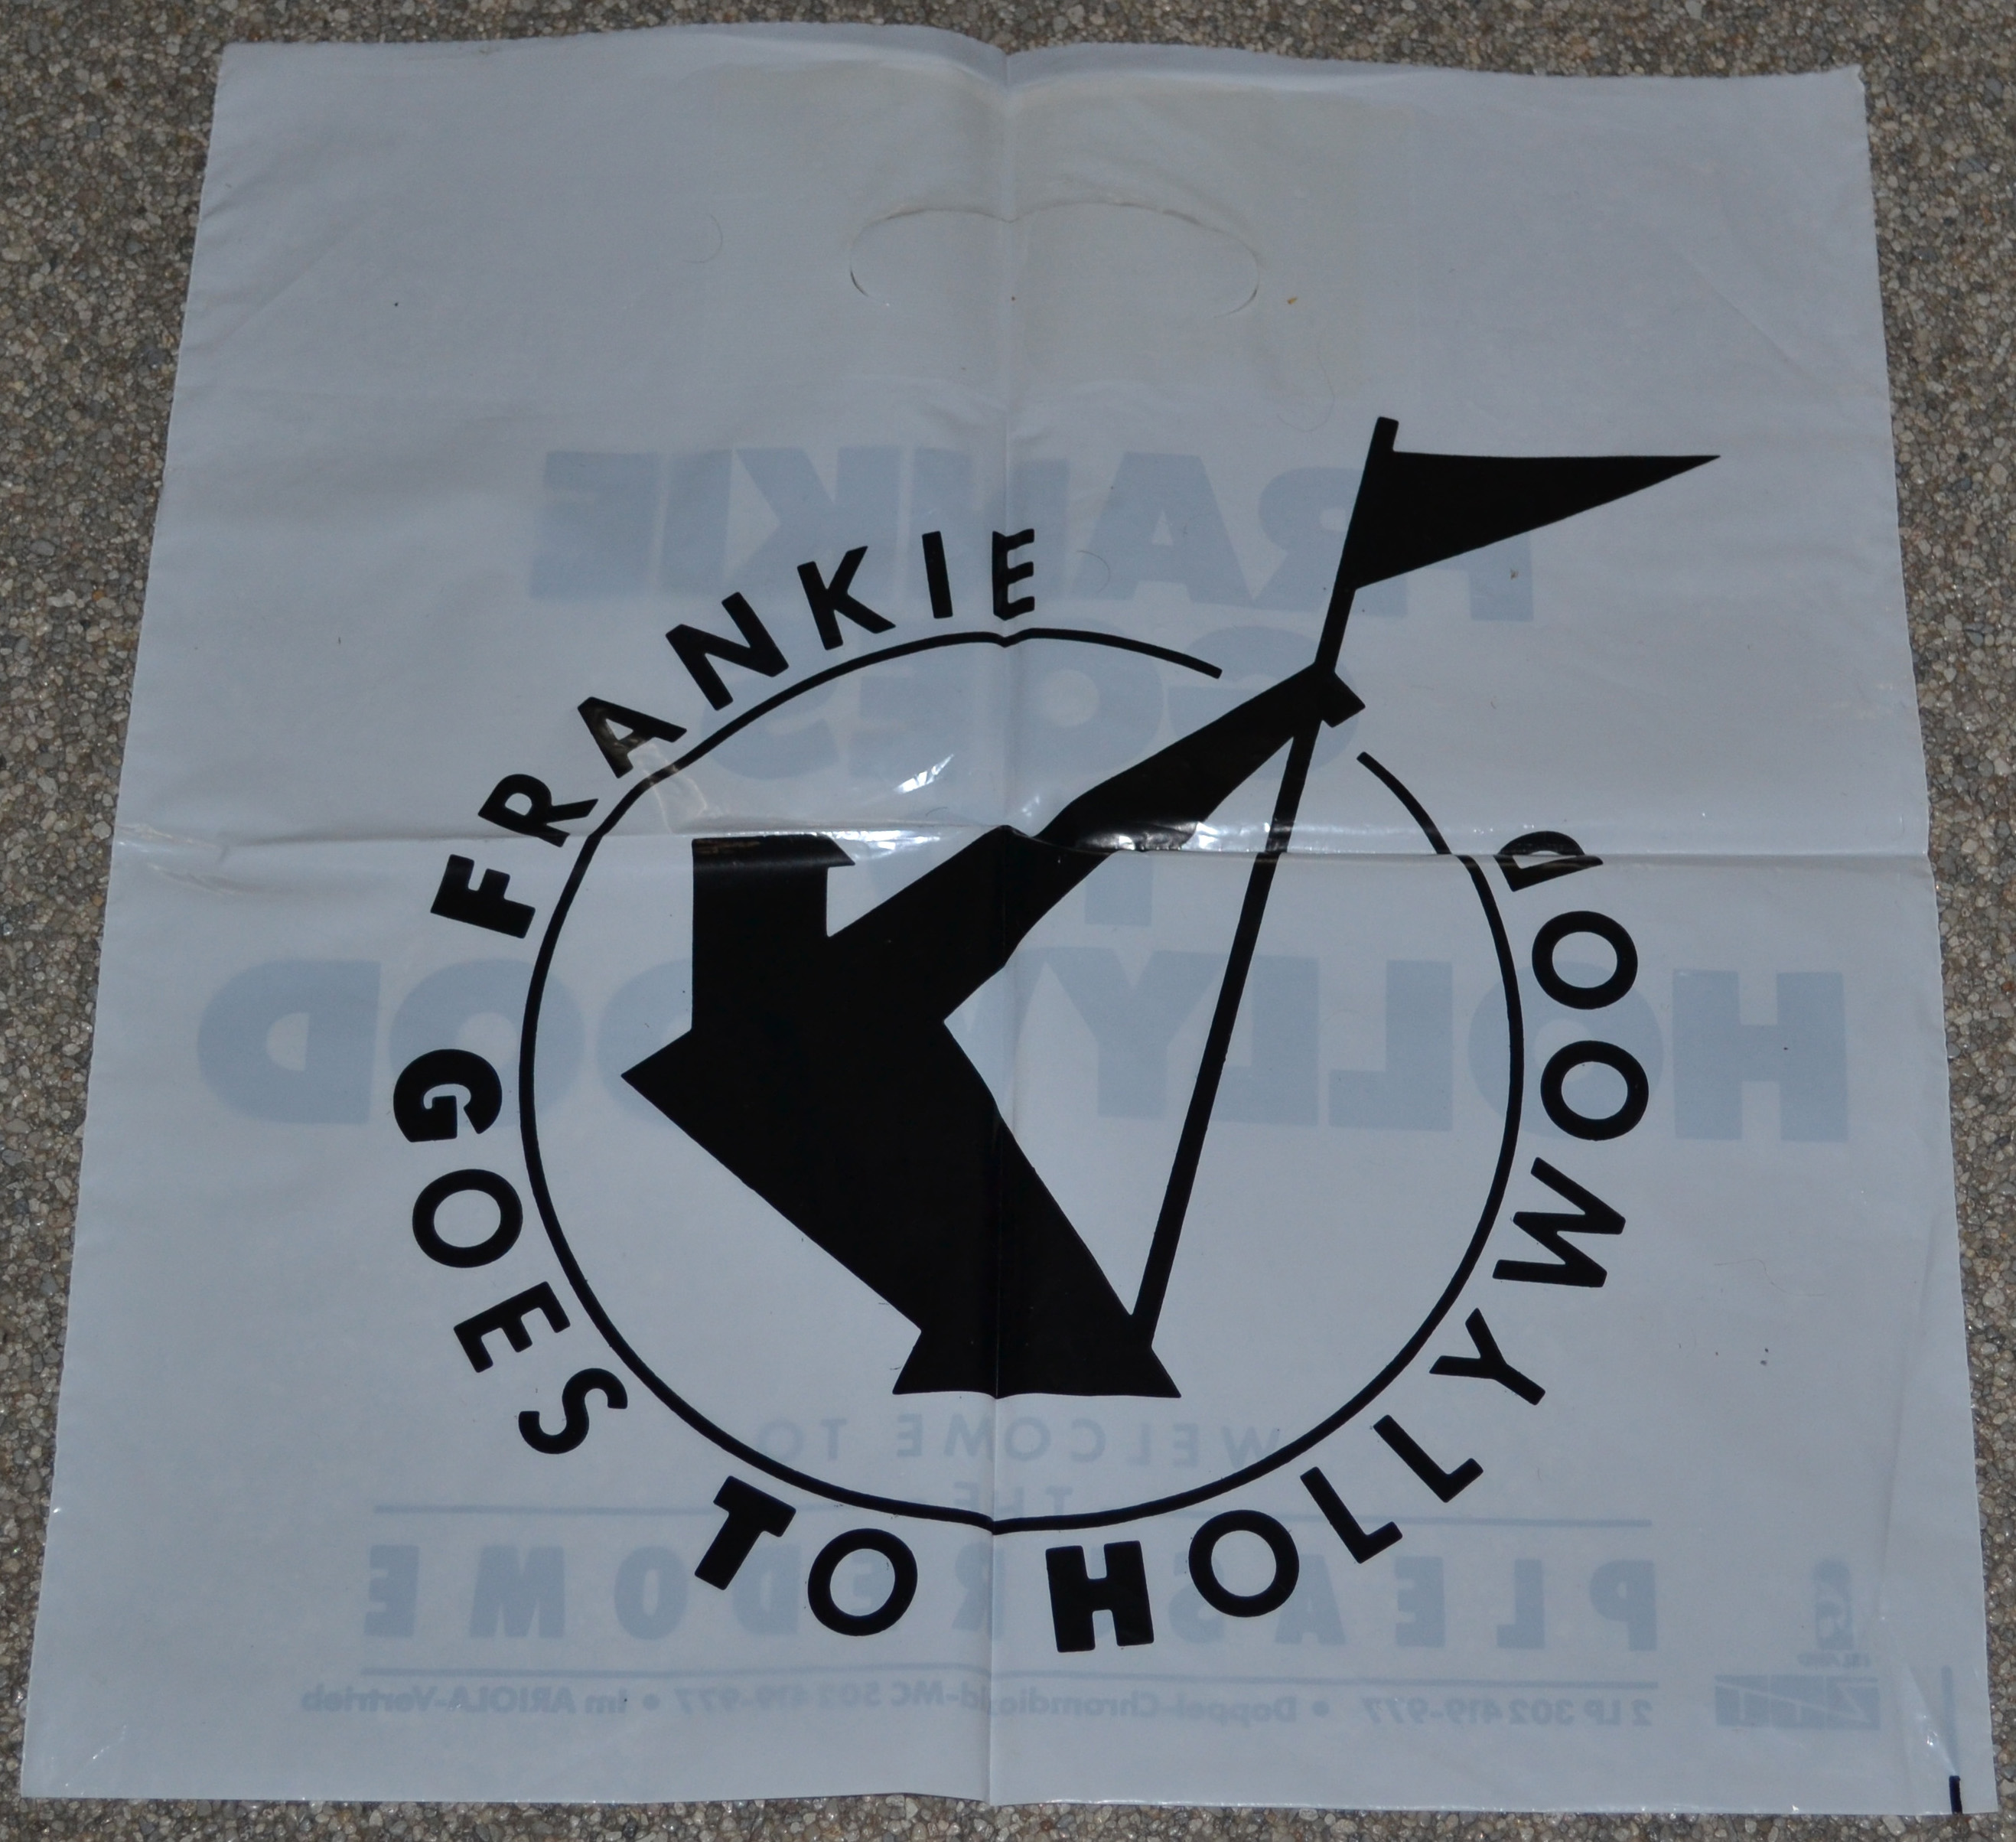 Plastic Frankie bag